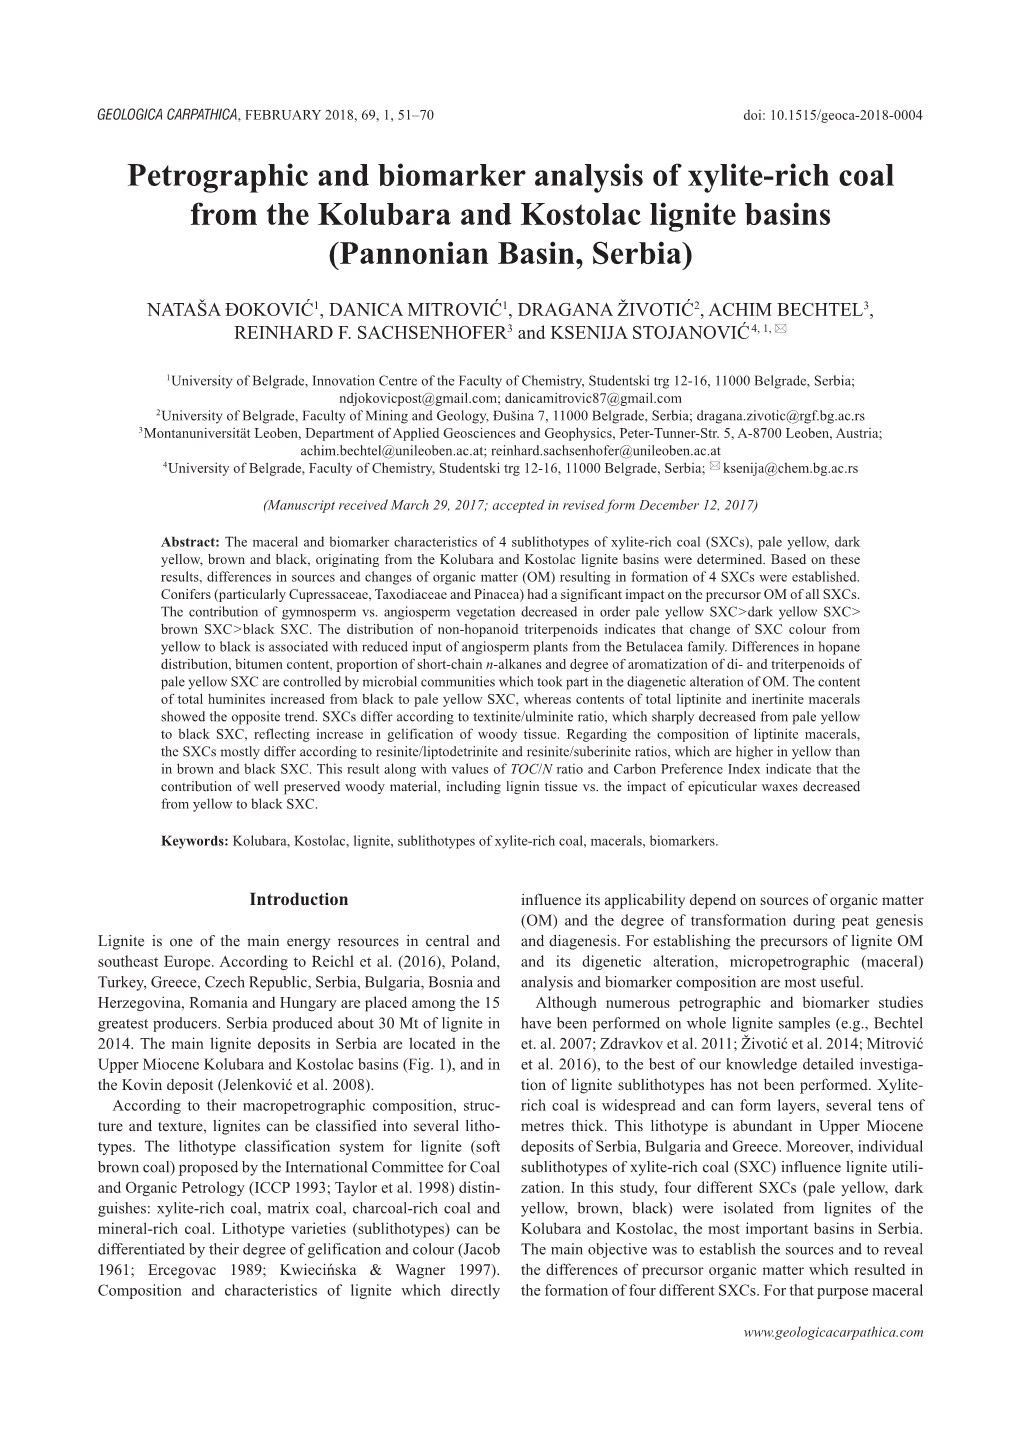 Petrographic and Biomarker Analysis of Xylite-Rich Coal from the Kolubara and Kostolac Lignite Basins (Pannonian Basin, Serbia)